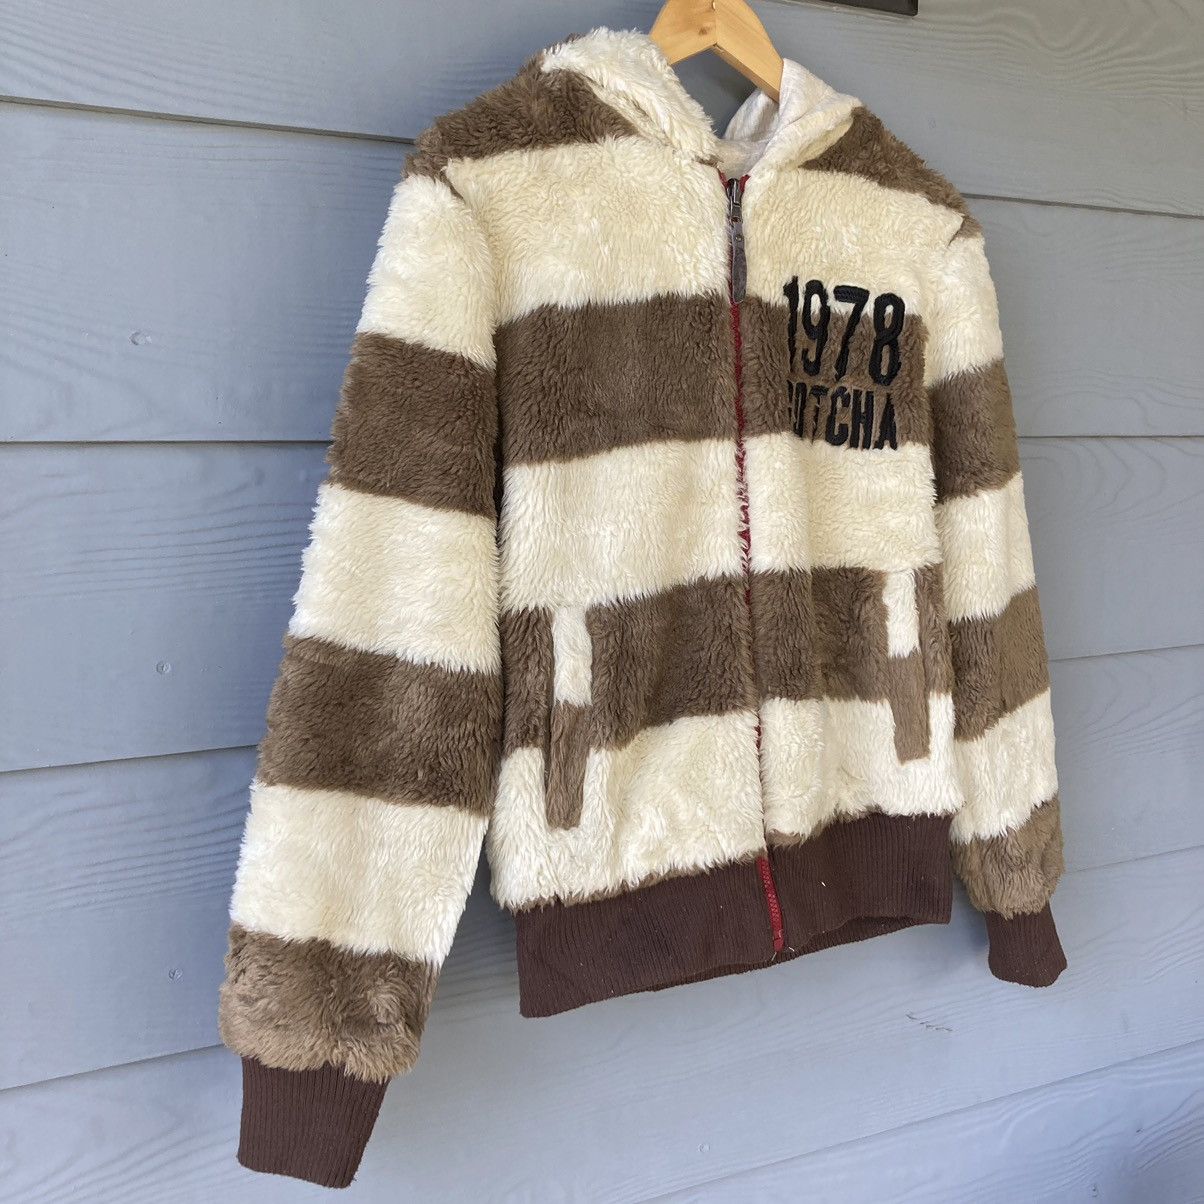 Outdoor Life - Vintage Gotcha Fleece Sweatshirt - 2